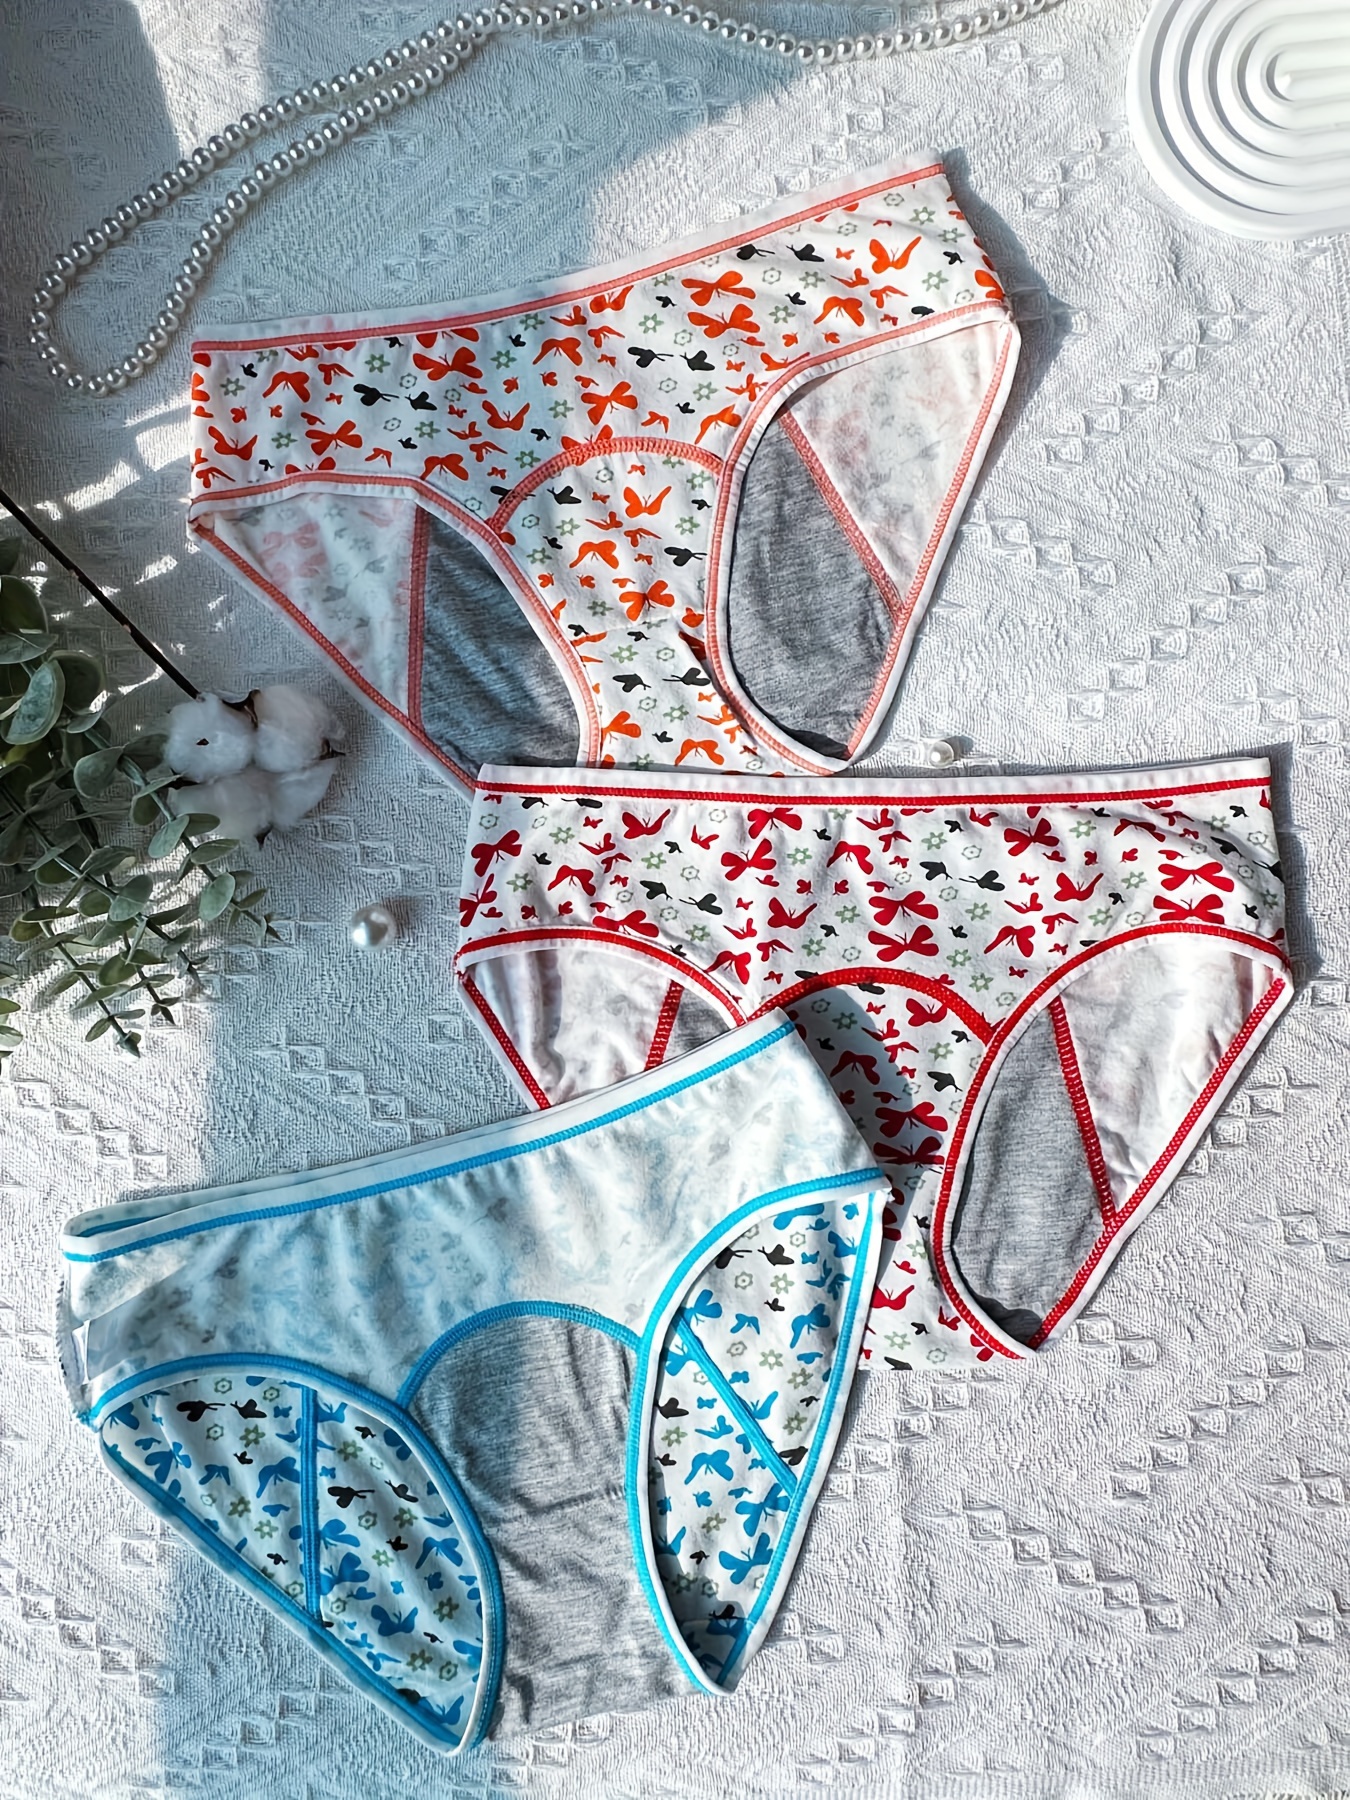 Menstrual Period Panties High Waist Comfy Full coverange - Temu Canada